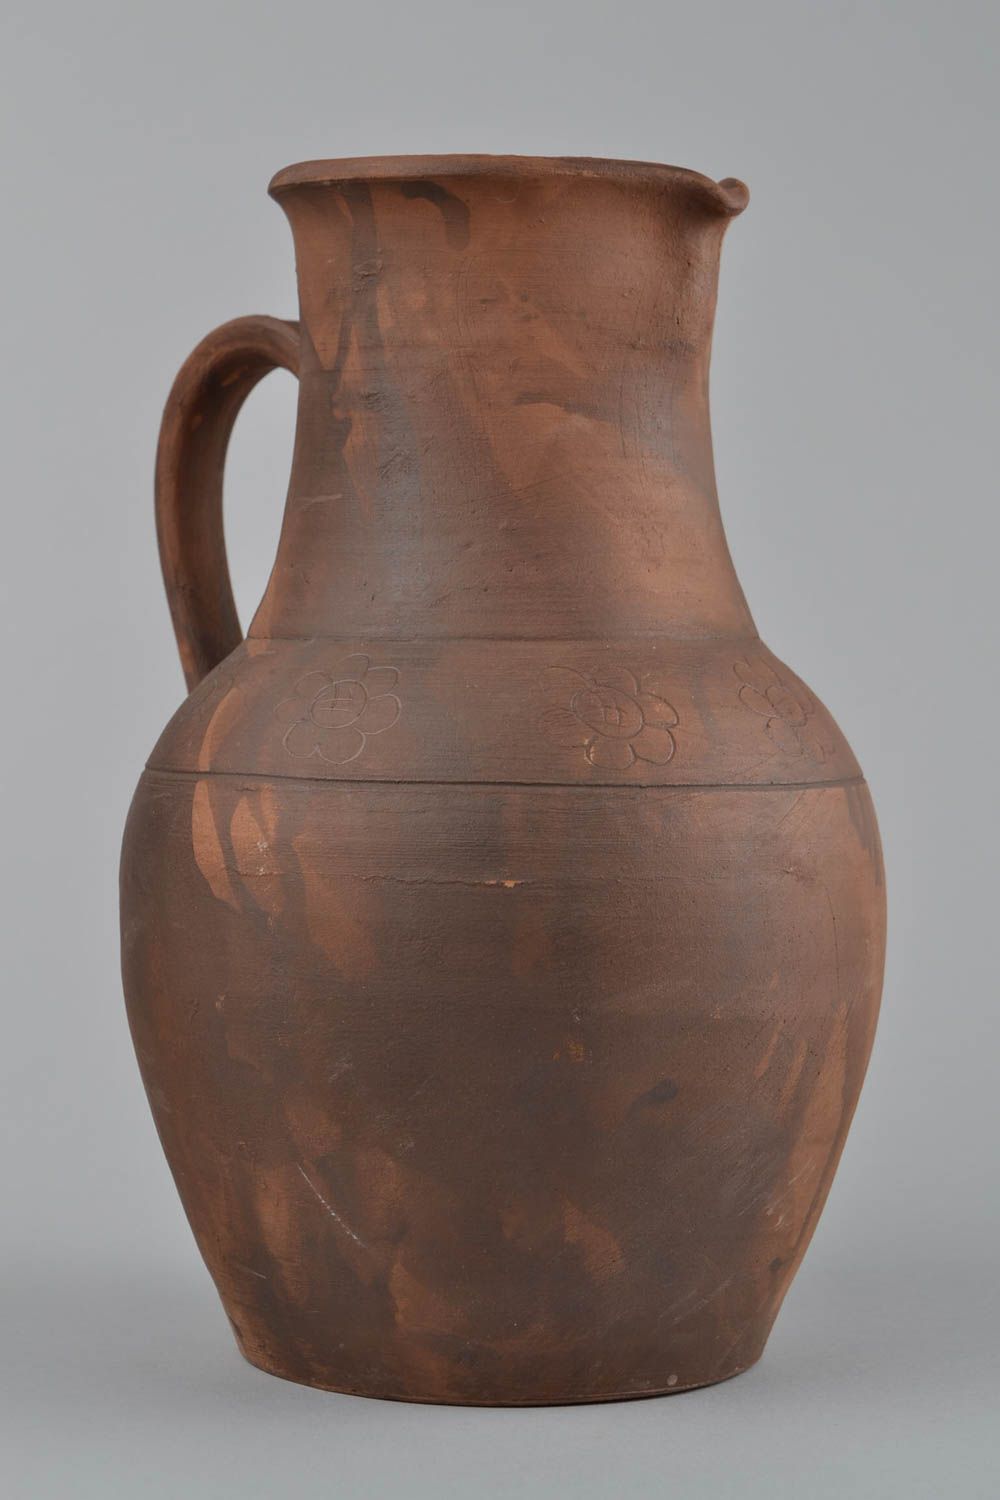 100 oz ceramic clay jug pitcher carafe in brown color 2,9 lb photo 3